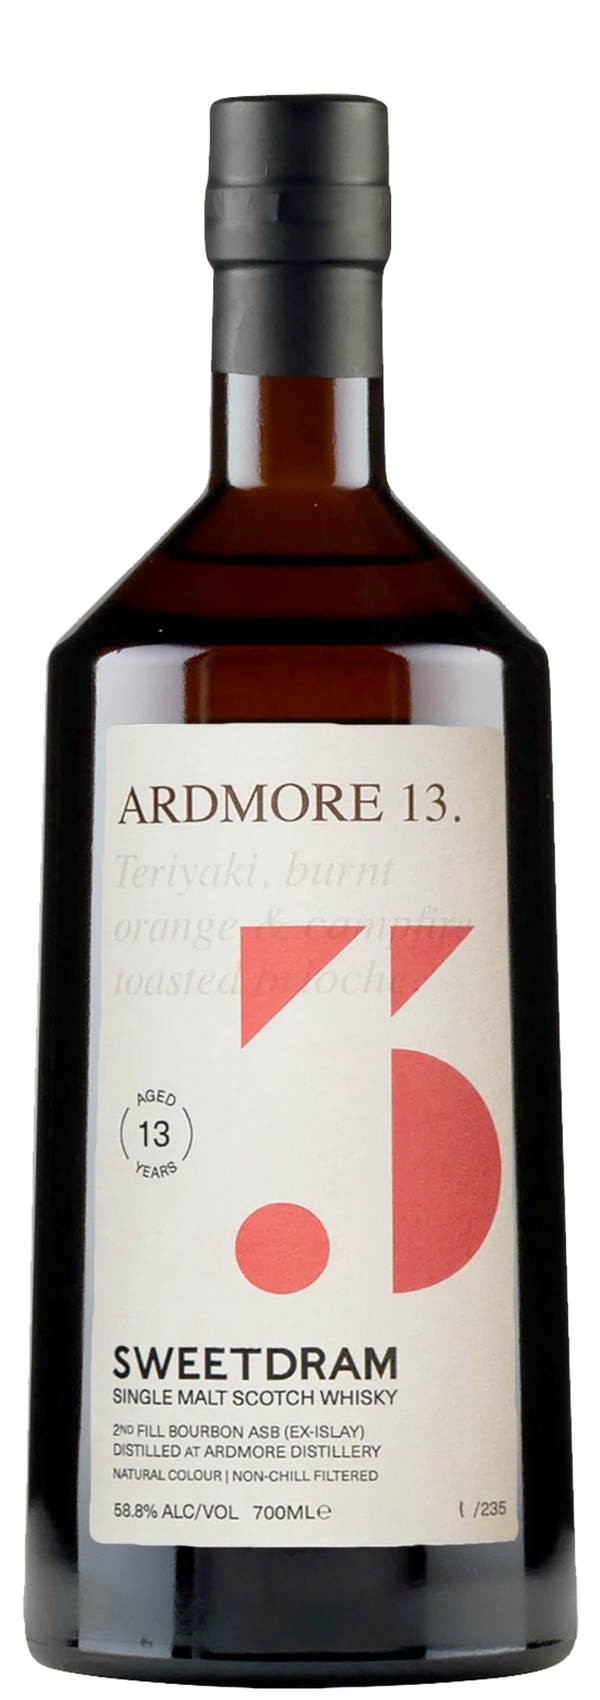 Sweetdram Ardmore 13 Single Malt Scotch Whisky